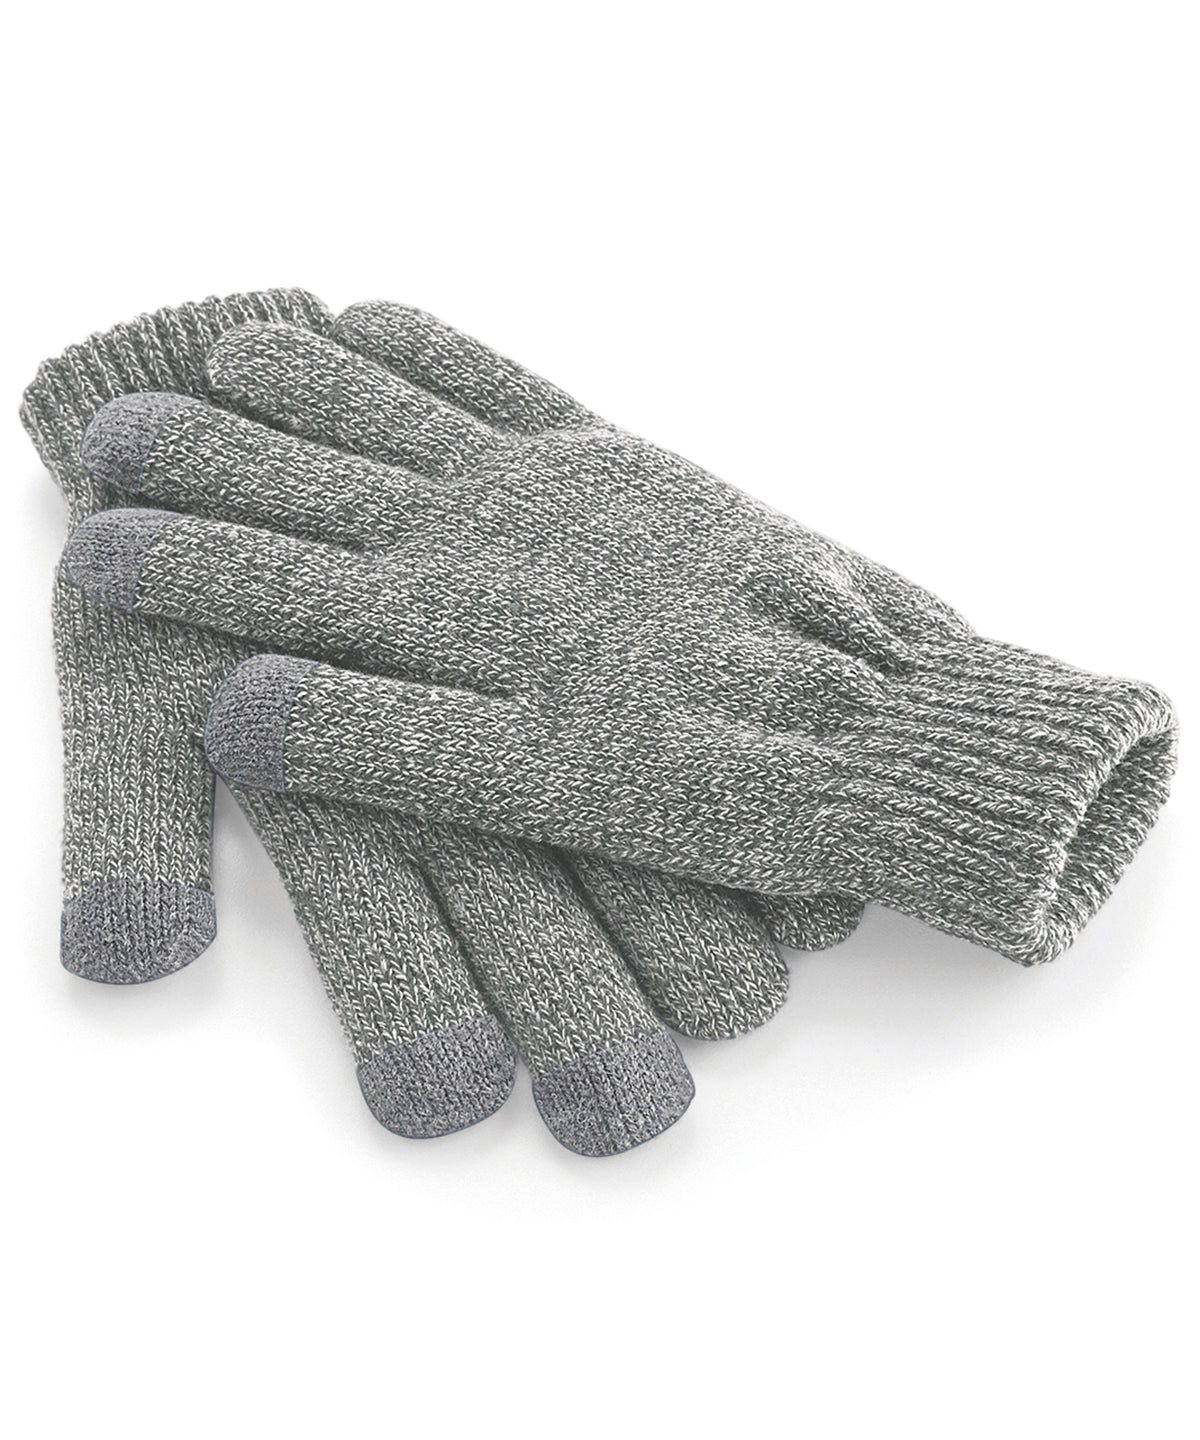 Personalised Gloves - Black Beechfield Touchscreen smart gloves